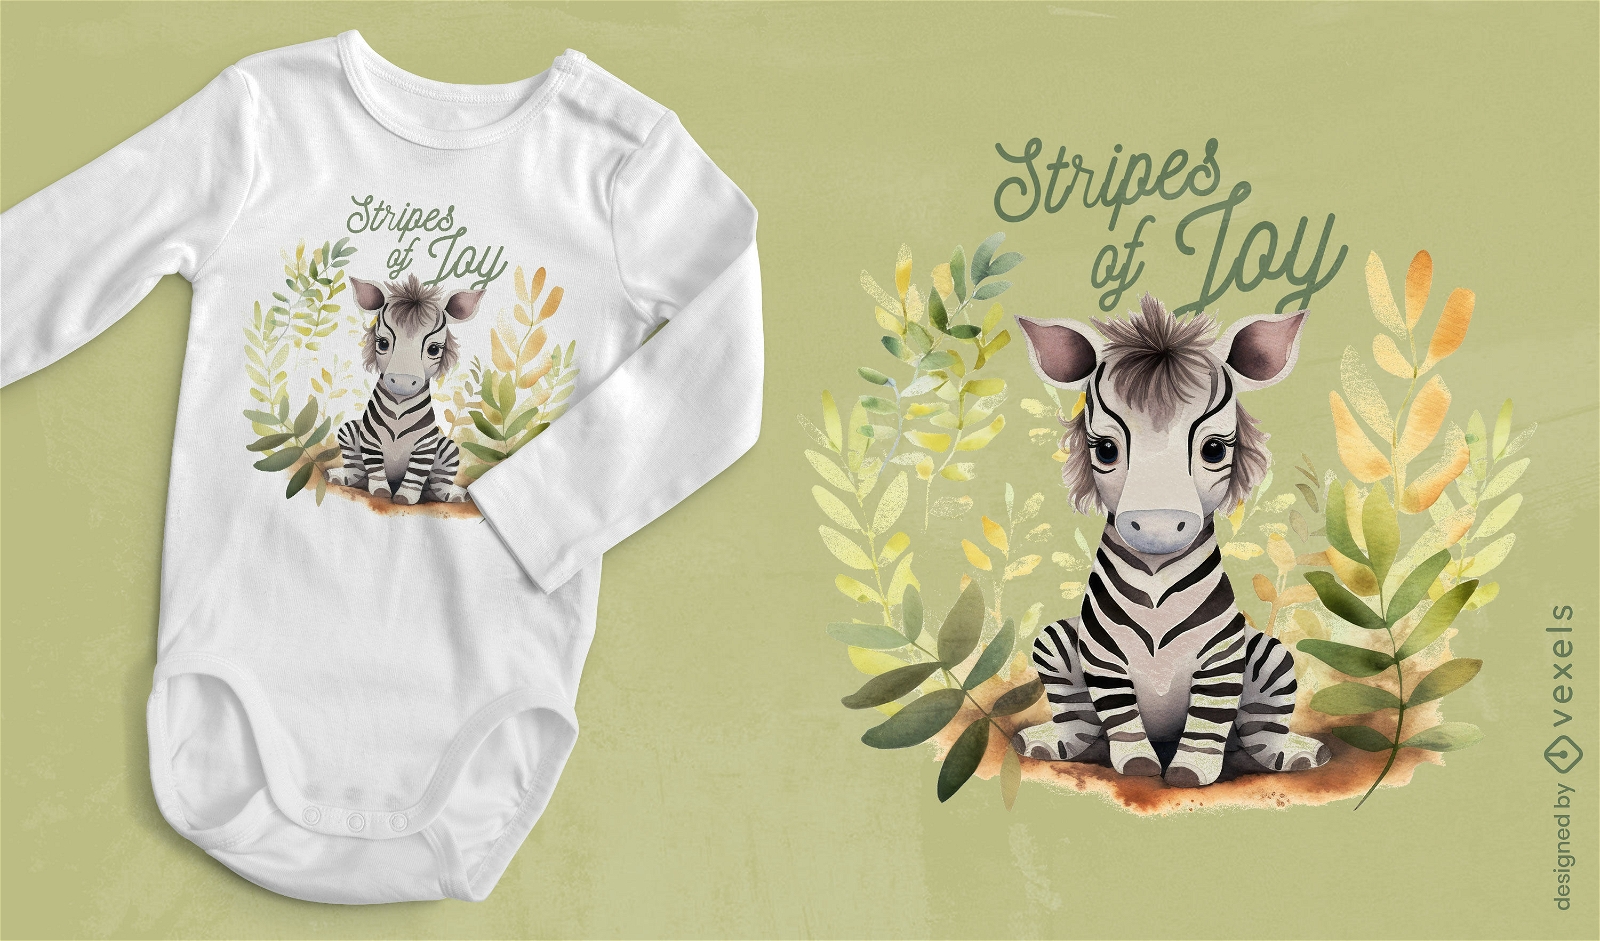 Baby animal zebra cute t-shirt psd